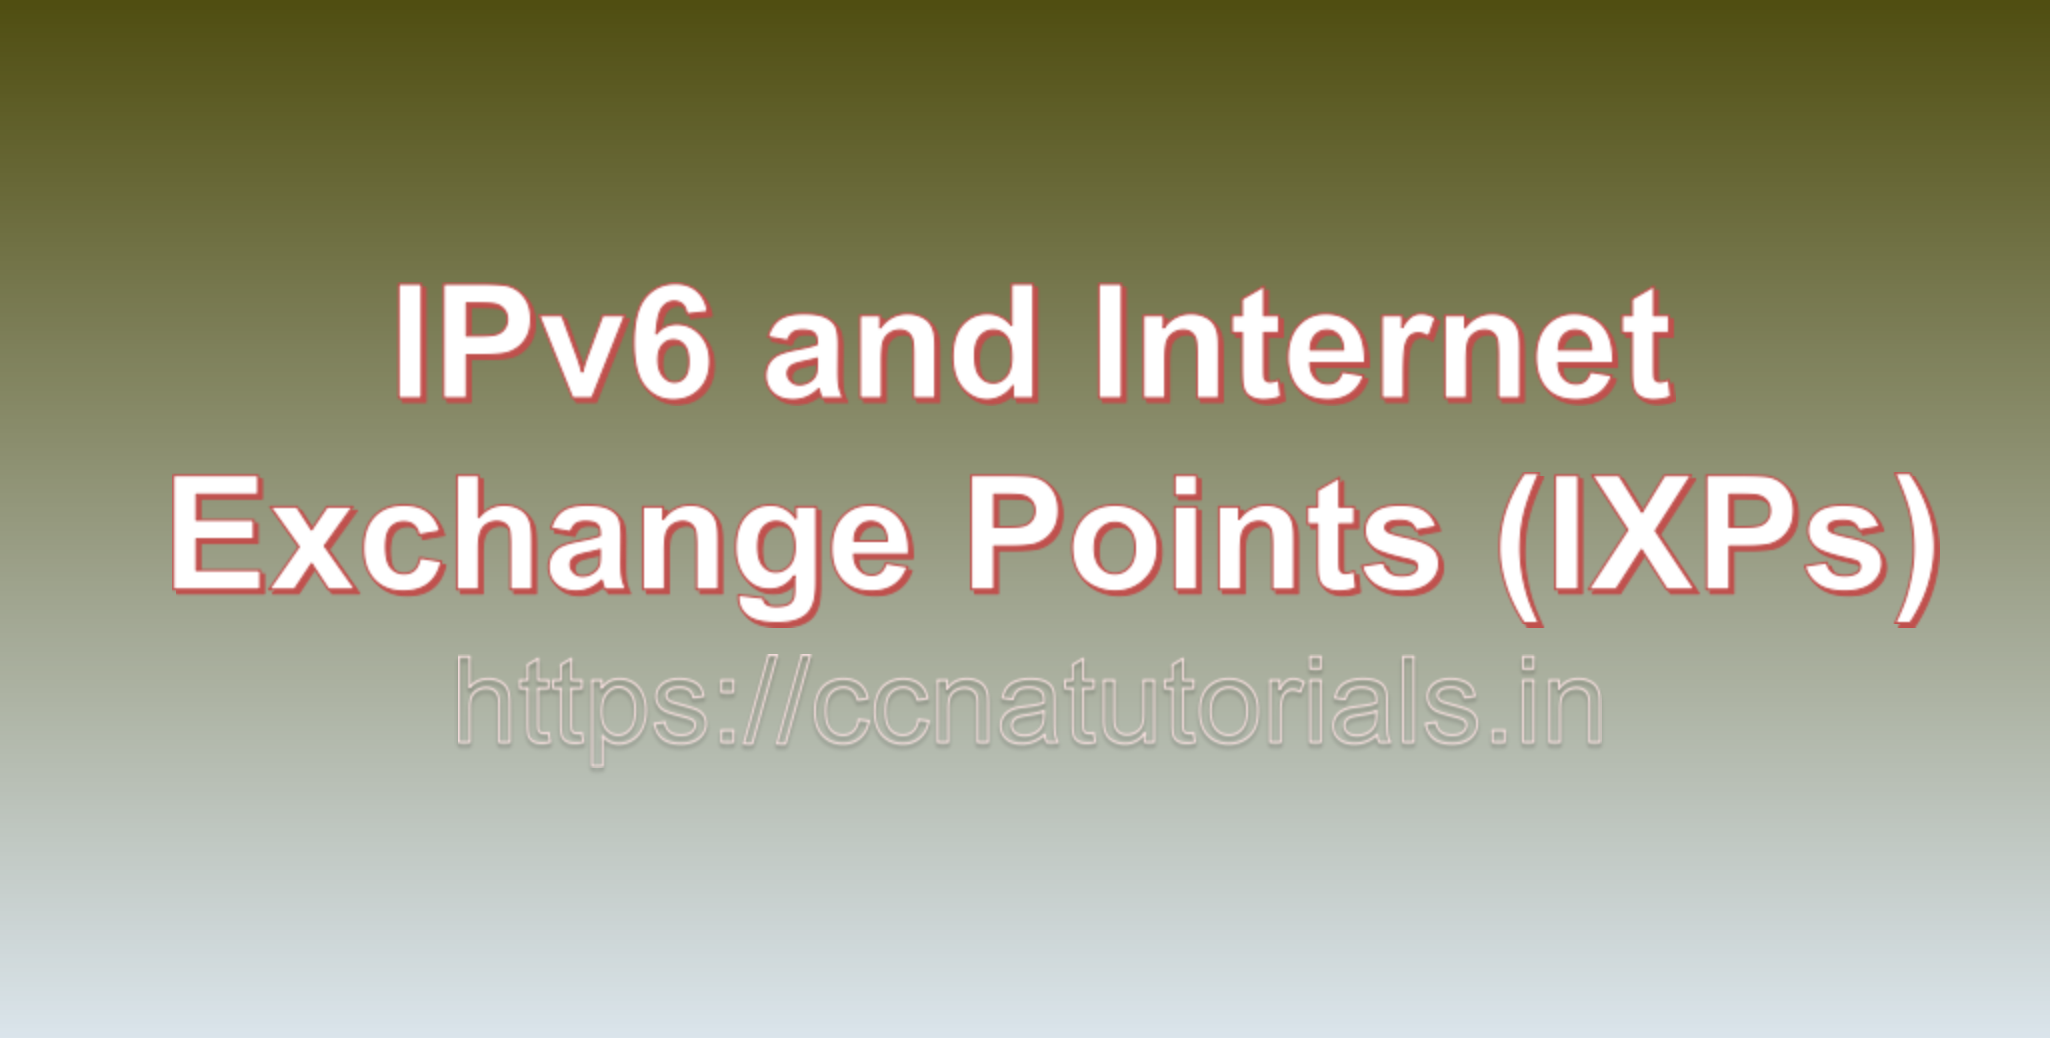 IPv6 and Internet Exchange Points (IXPs), ccna, ccna tutorials